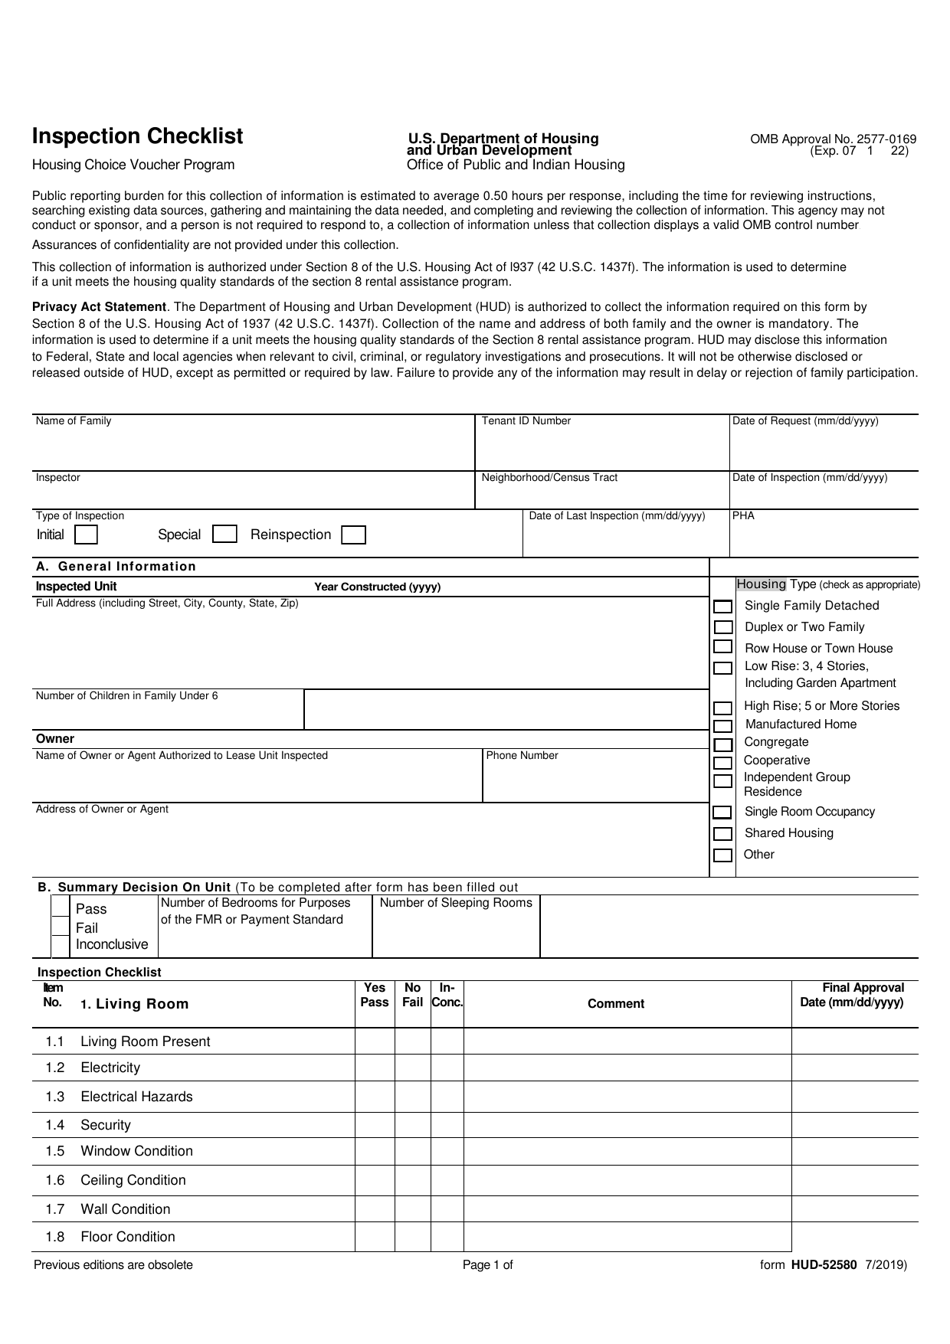 Form HUD-52580 Inspection Checklist Housing Choice Voucher Program, Page 1